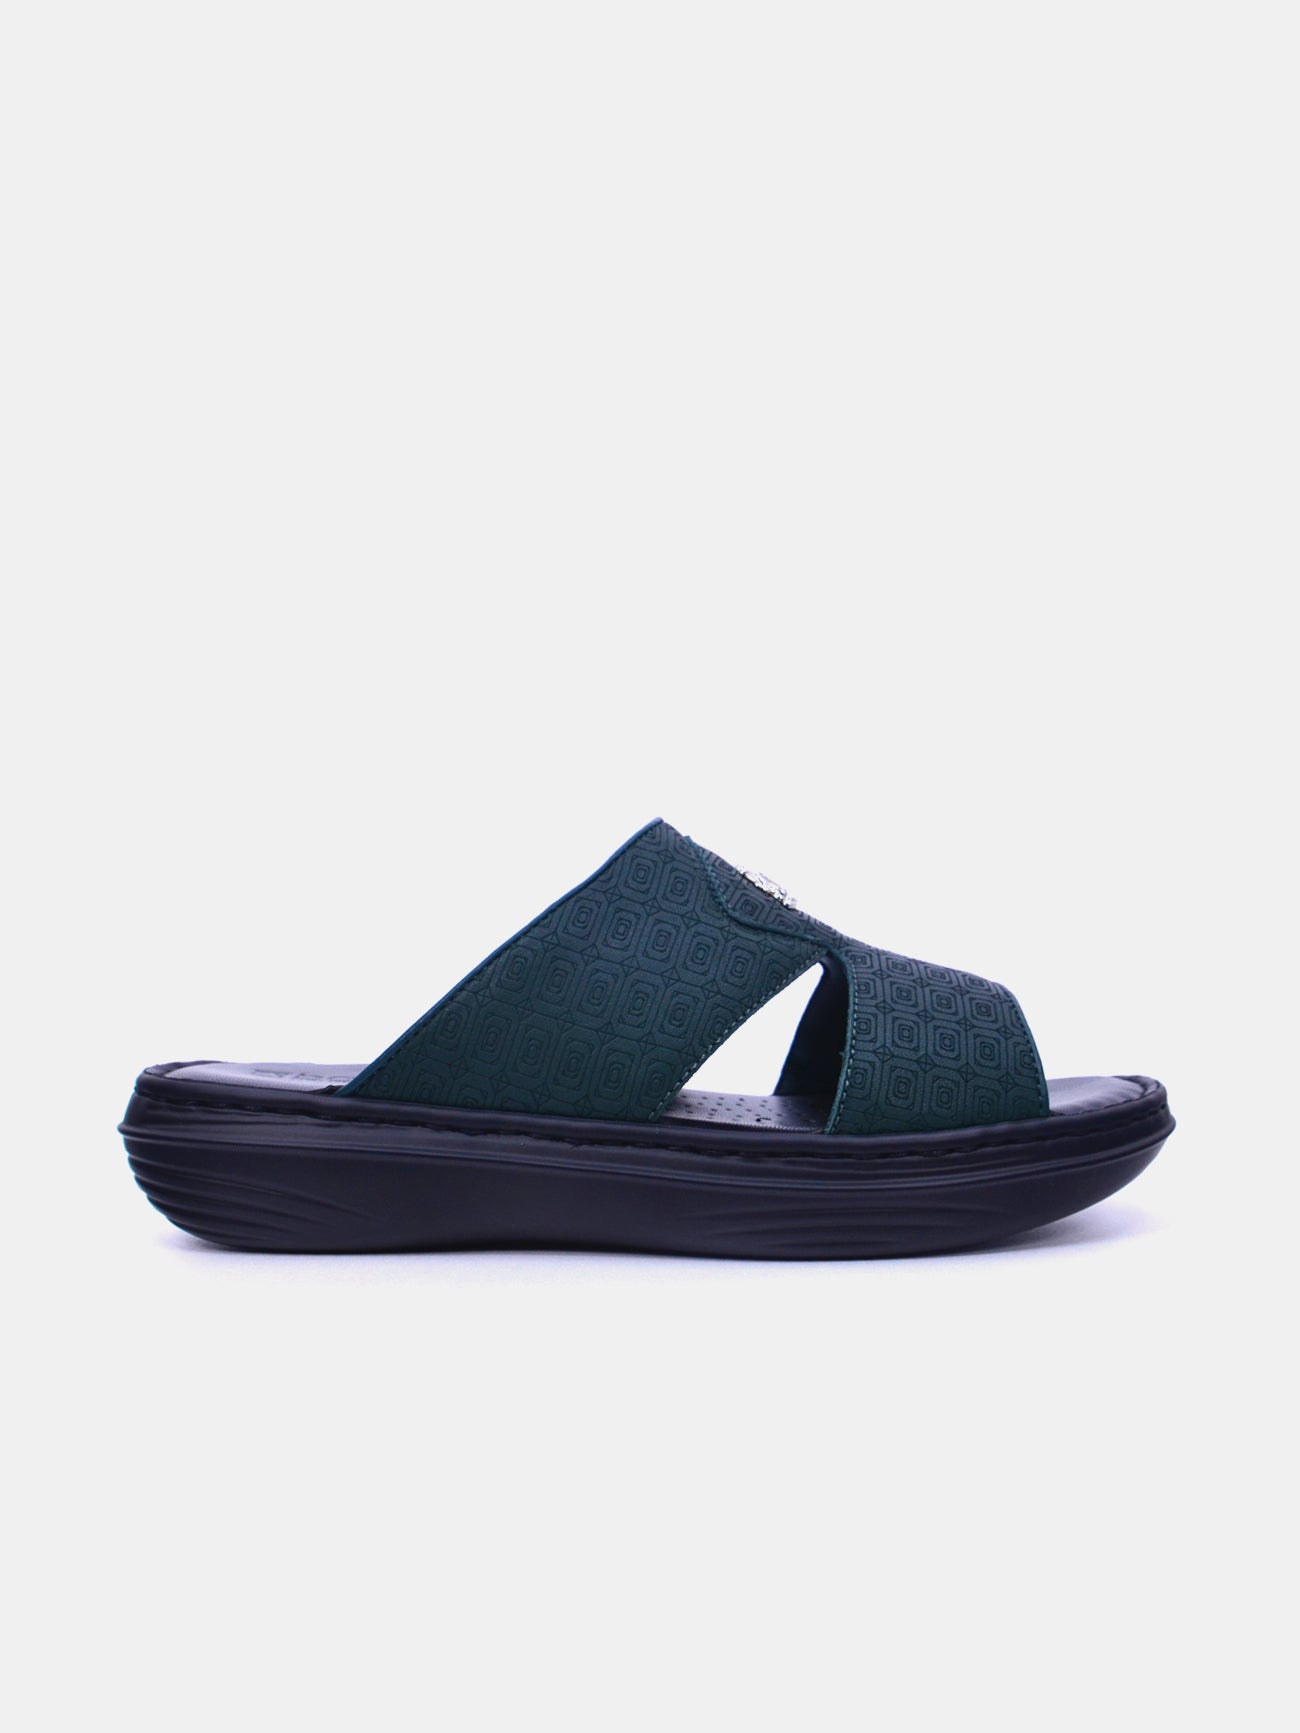 Barjeel Uno 21410-12 Men's Arabic Sandals #color_Green